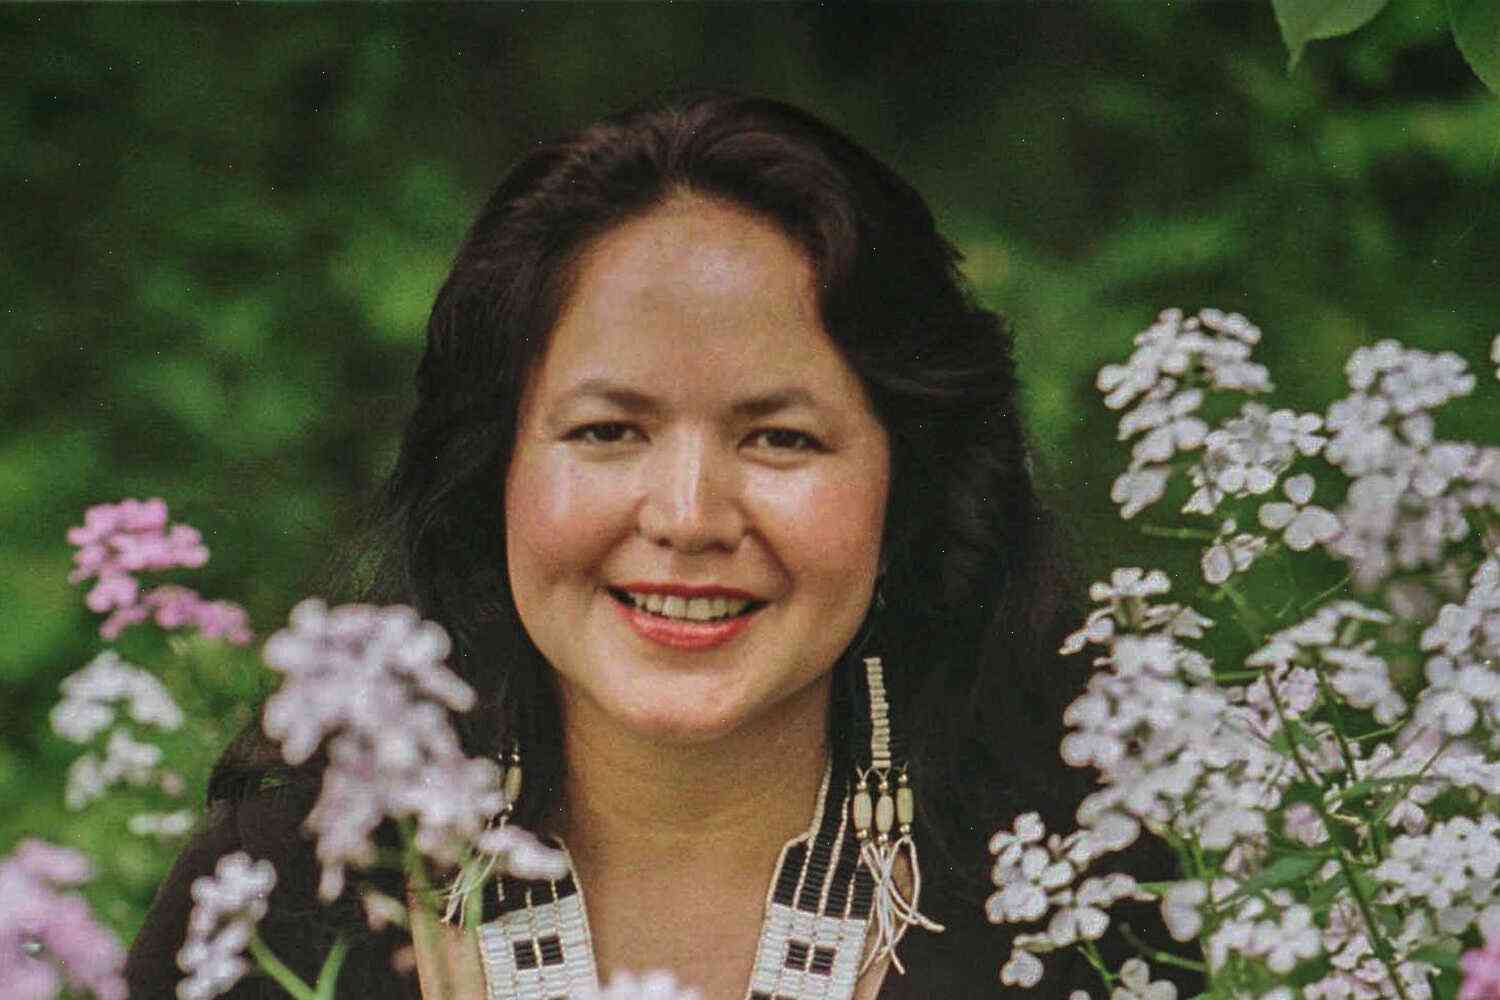 One of Native America’s greats, legendary singer Joanne Shenandoah, dies at 64